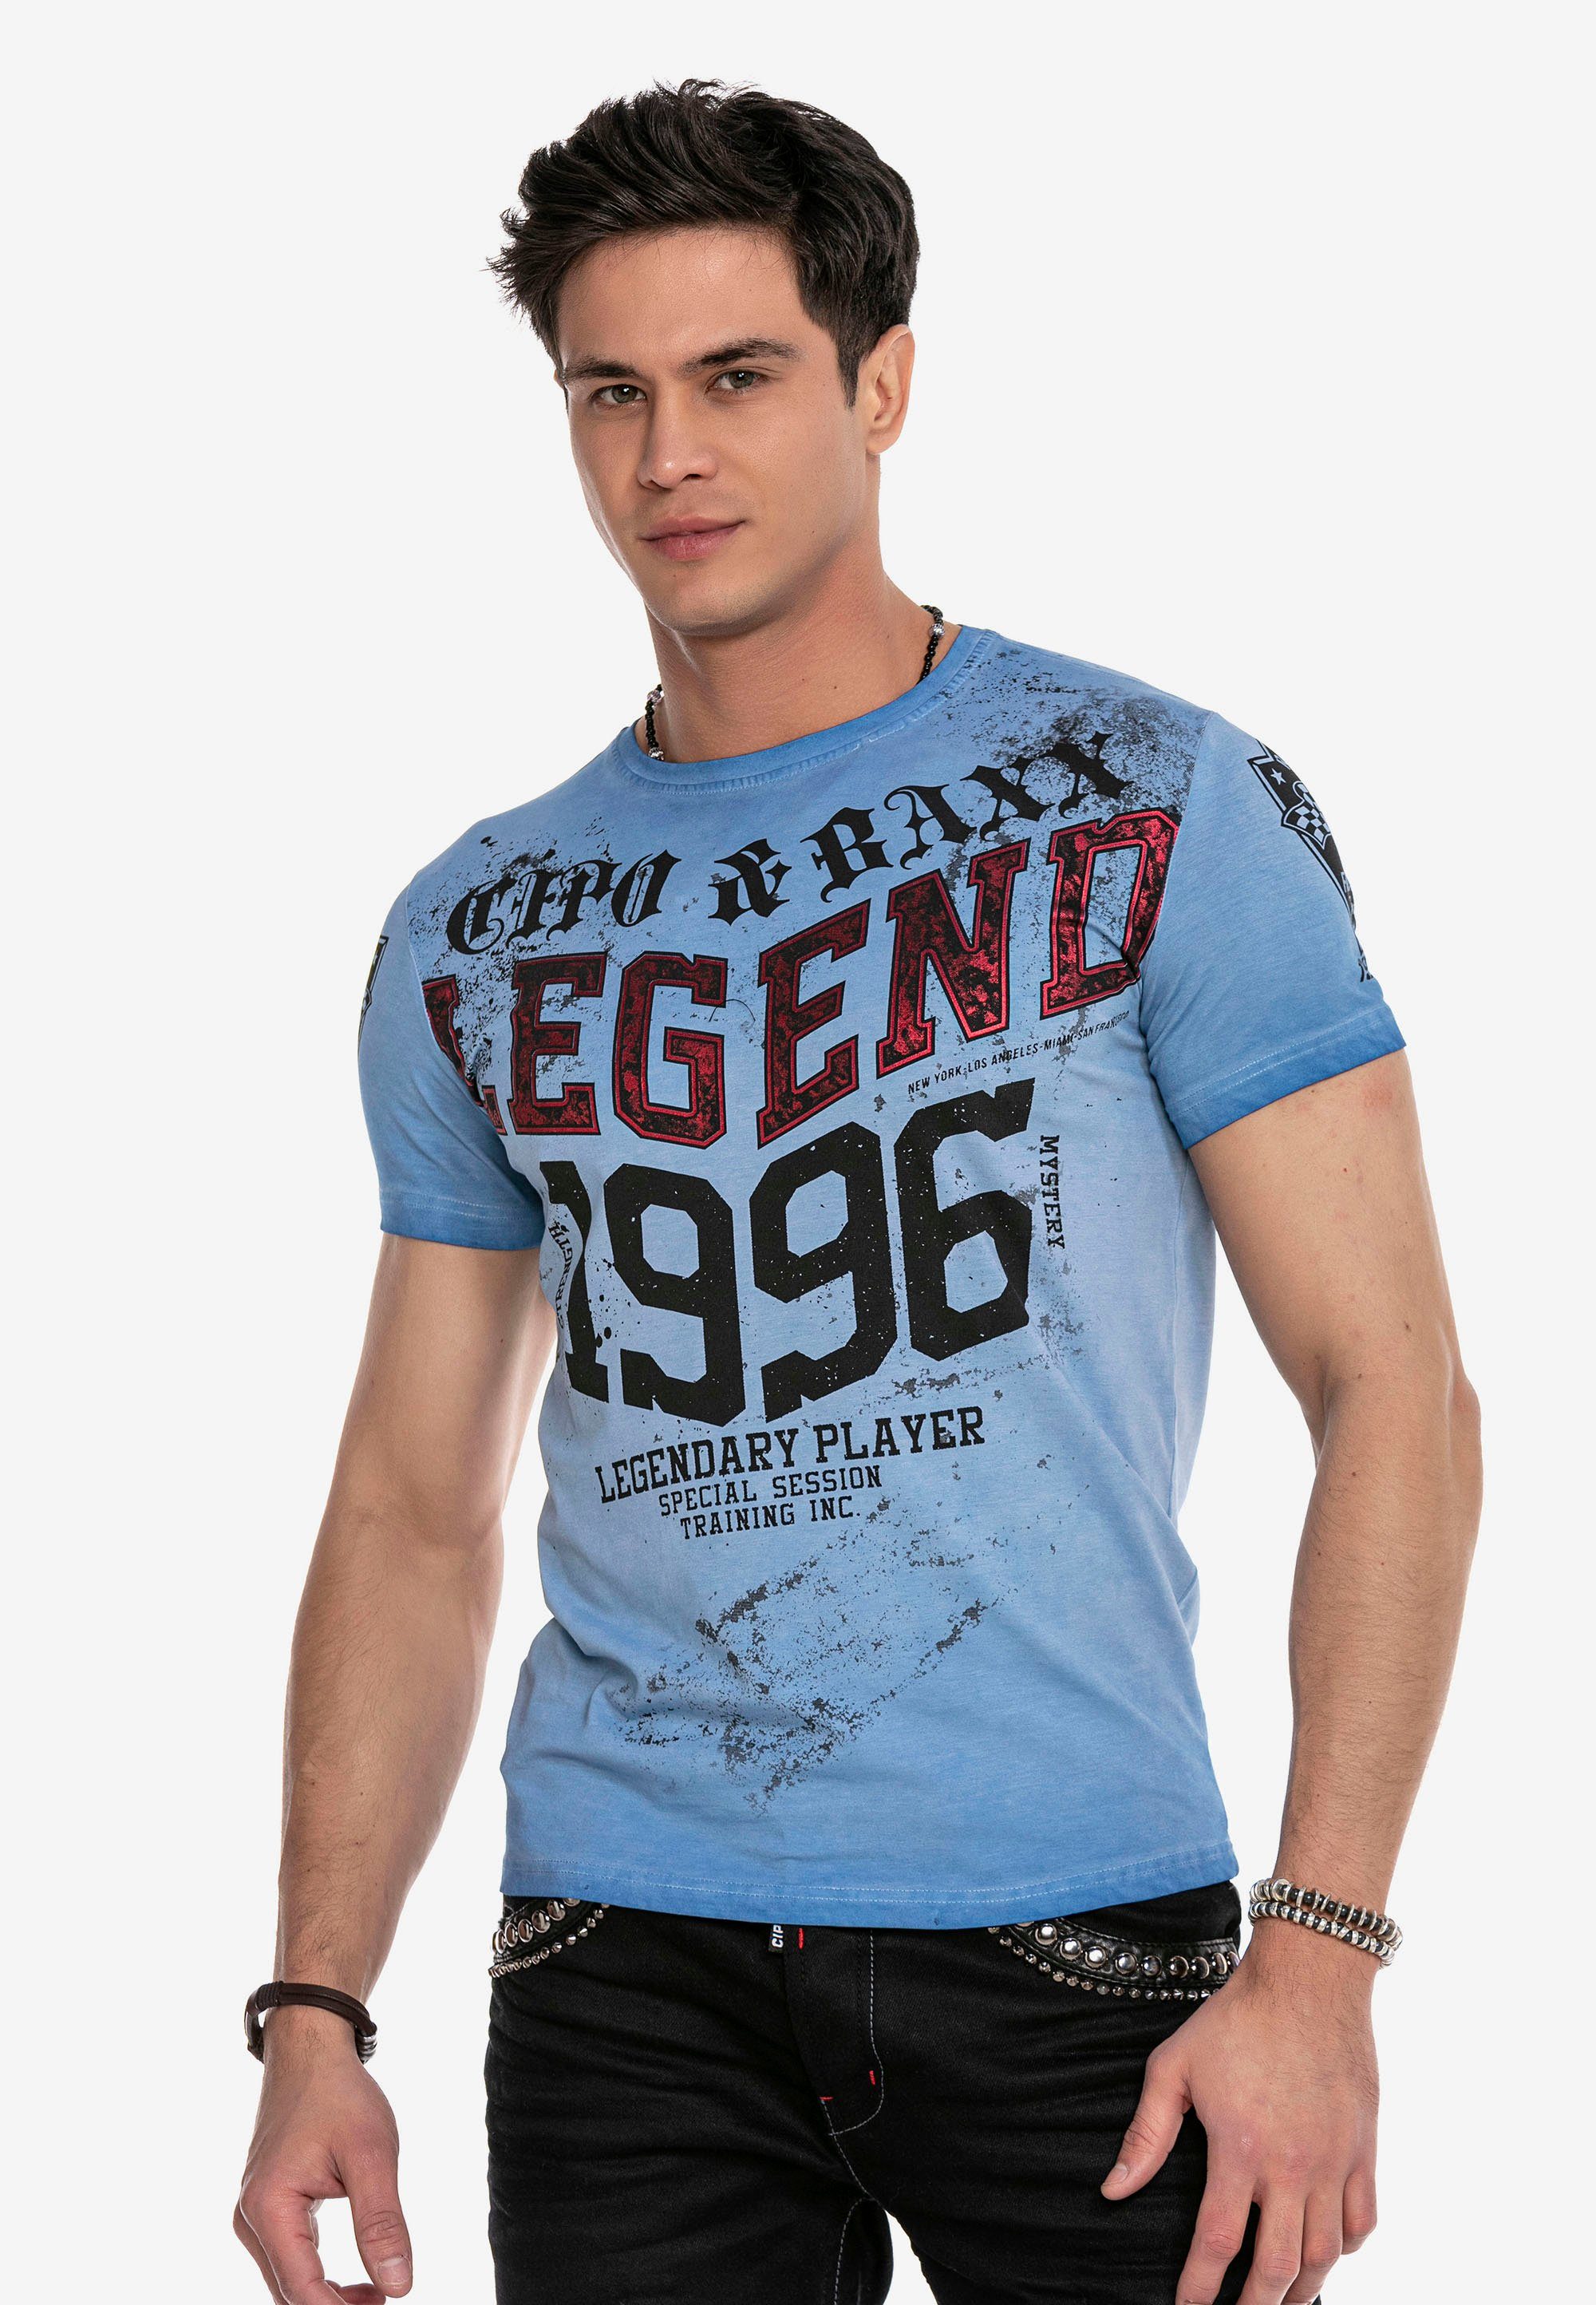 Baxx & T-Shirt coolem Print mit Cipo